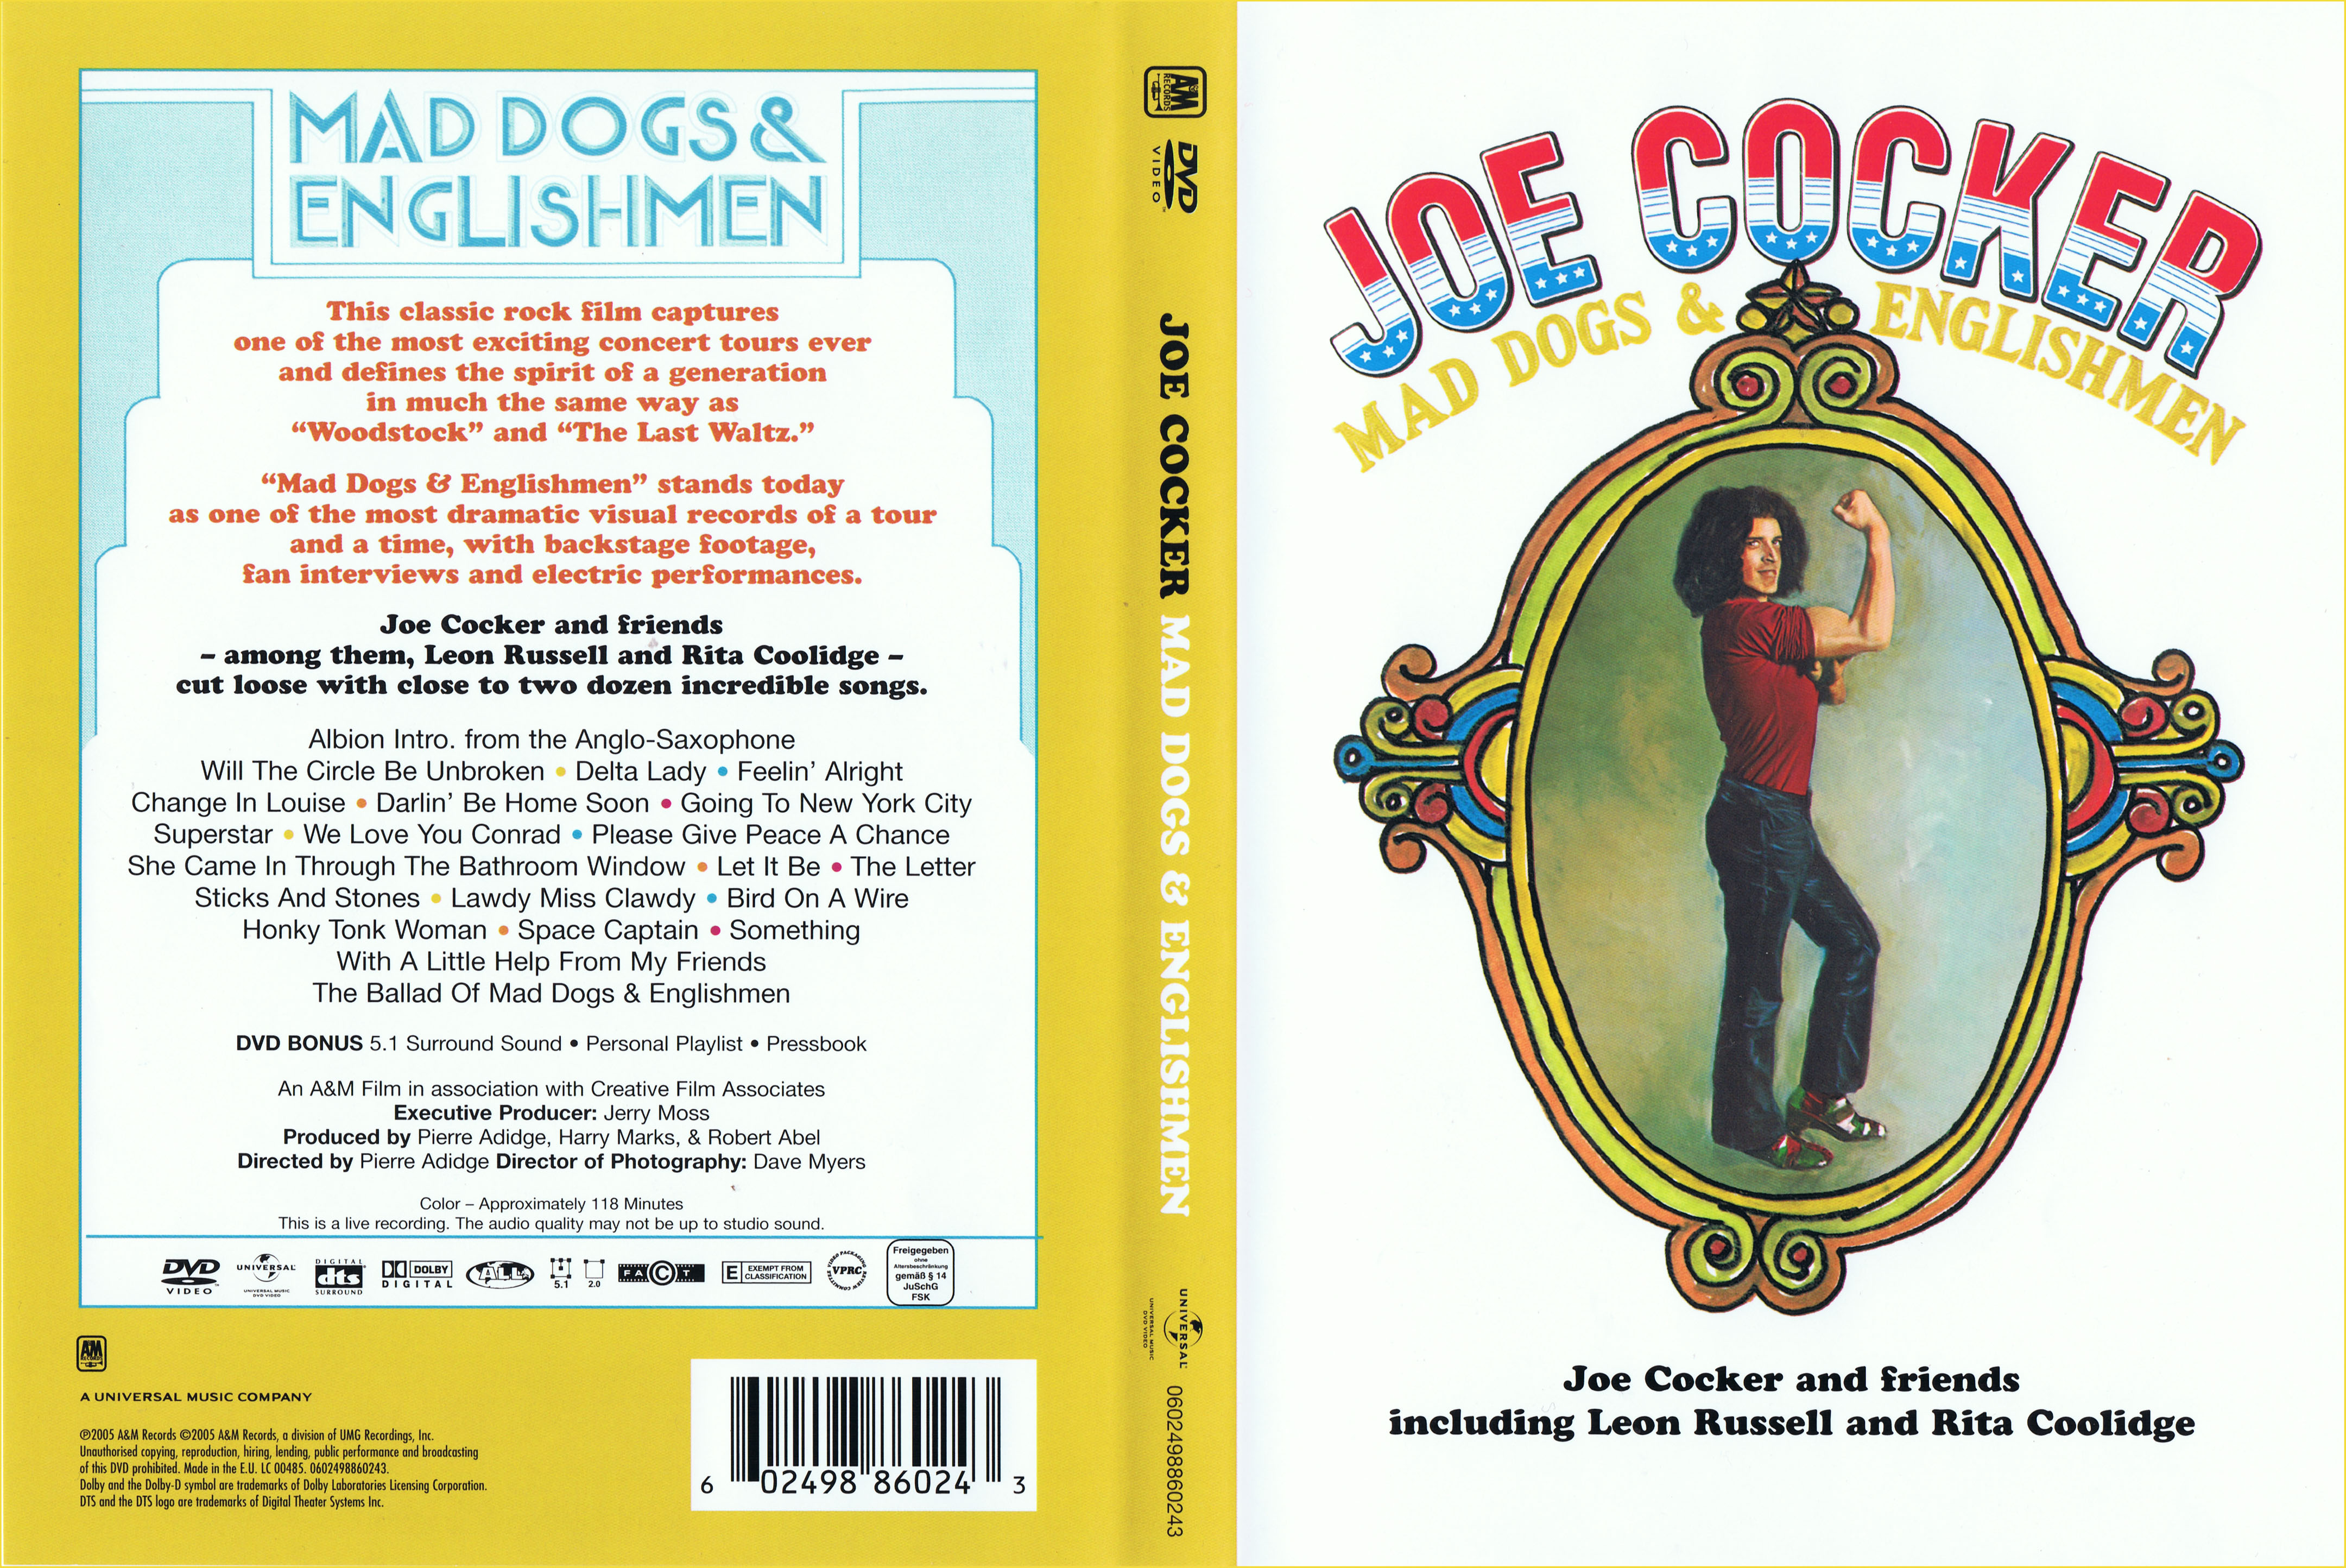 Jaquette DVD Joe Cocker - Mad dog & englishmen